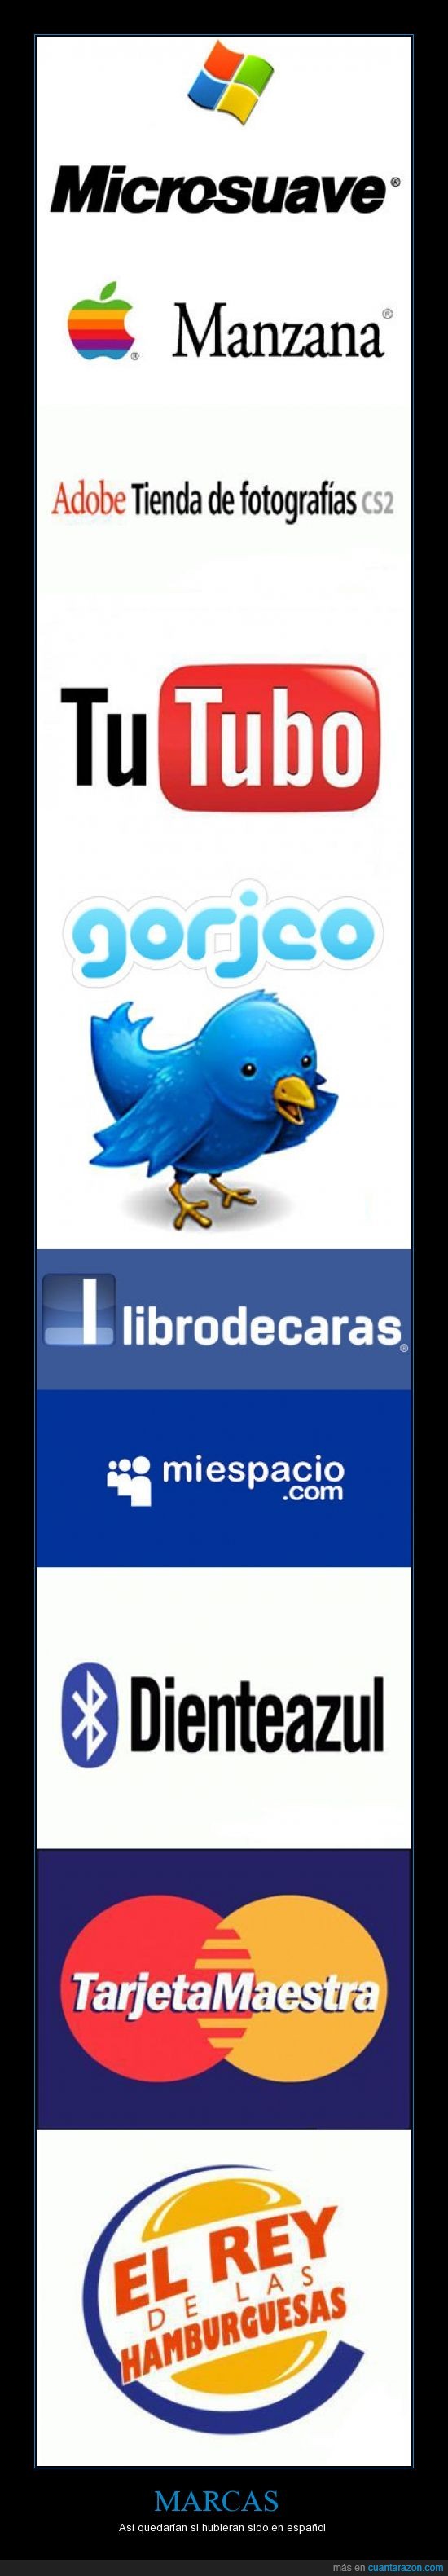 Twitter,Marcas,Corporativas,Burguer King,Microsoft,Youtube,Facebook